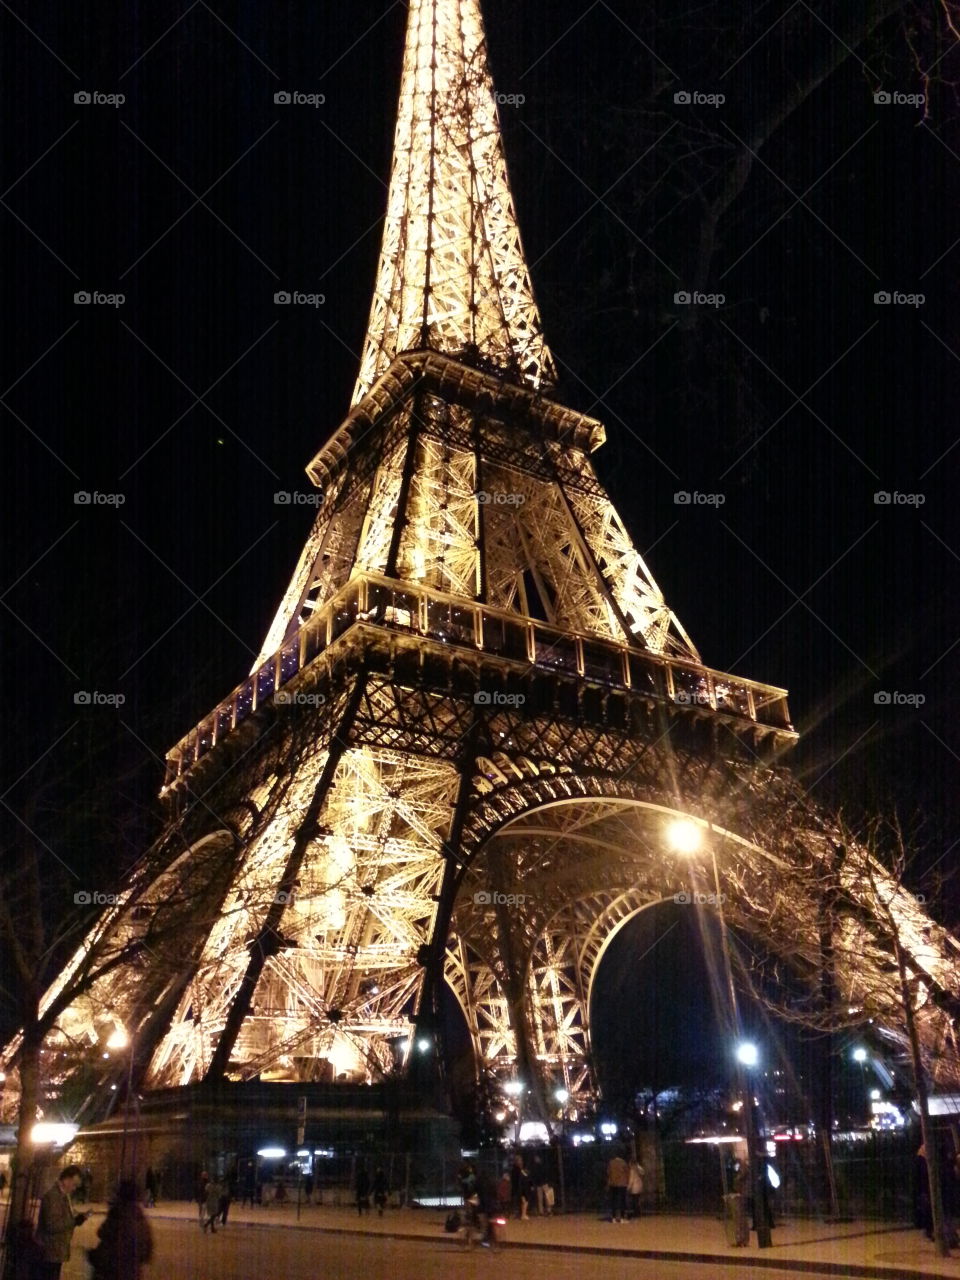 The Eiffel Tower/ Paris/France city lights 